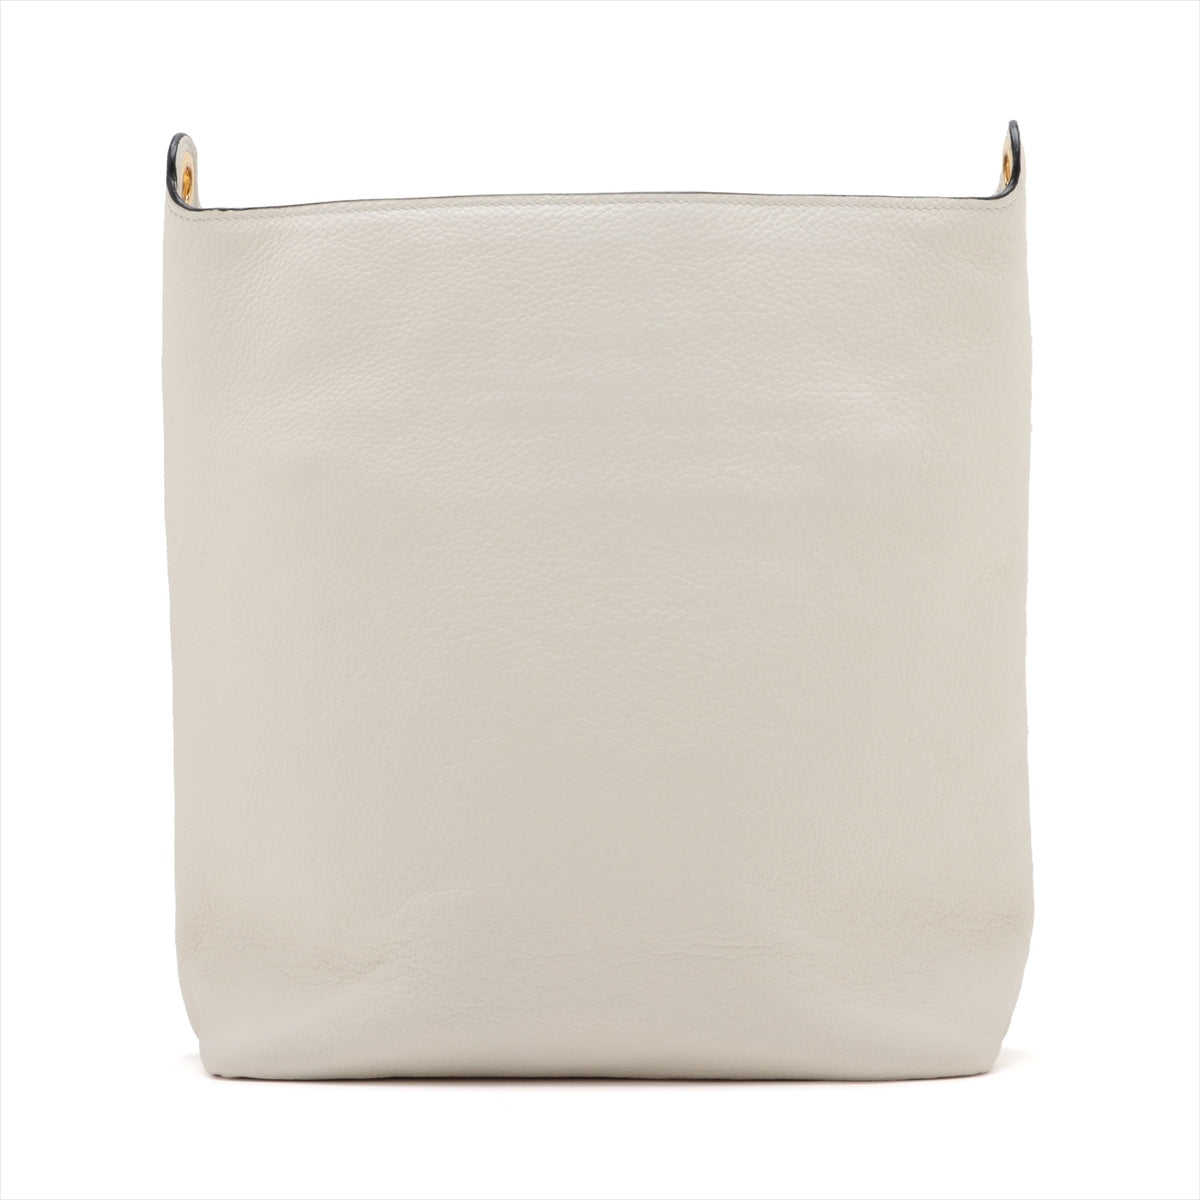 Prada Leather Shoulder Bag White